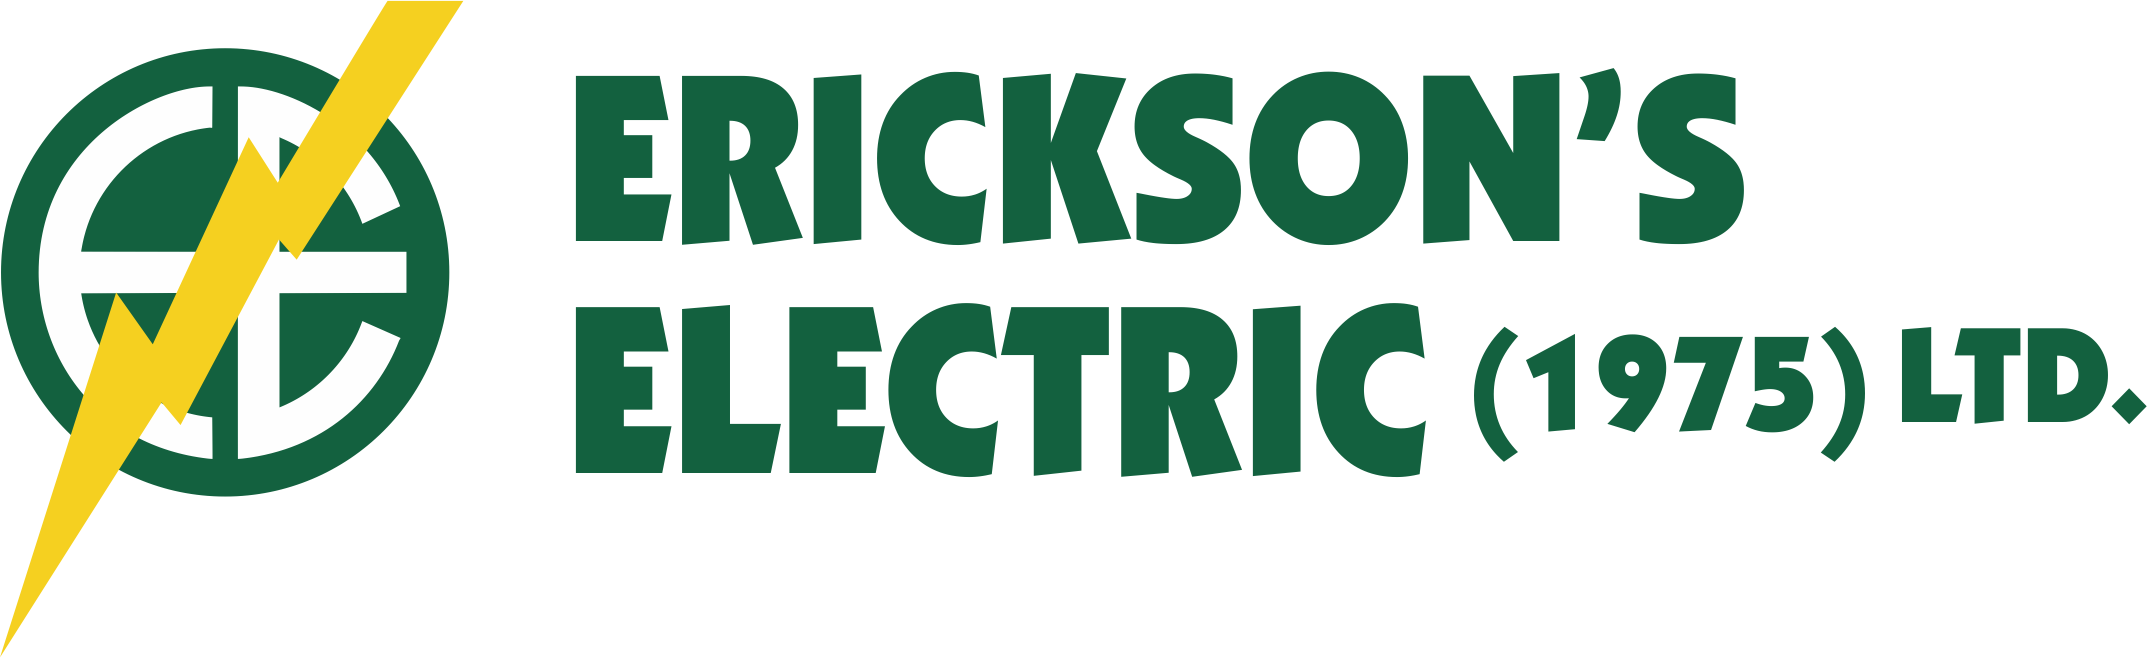 Erickson's Electric